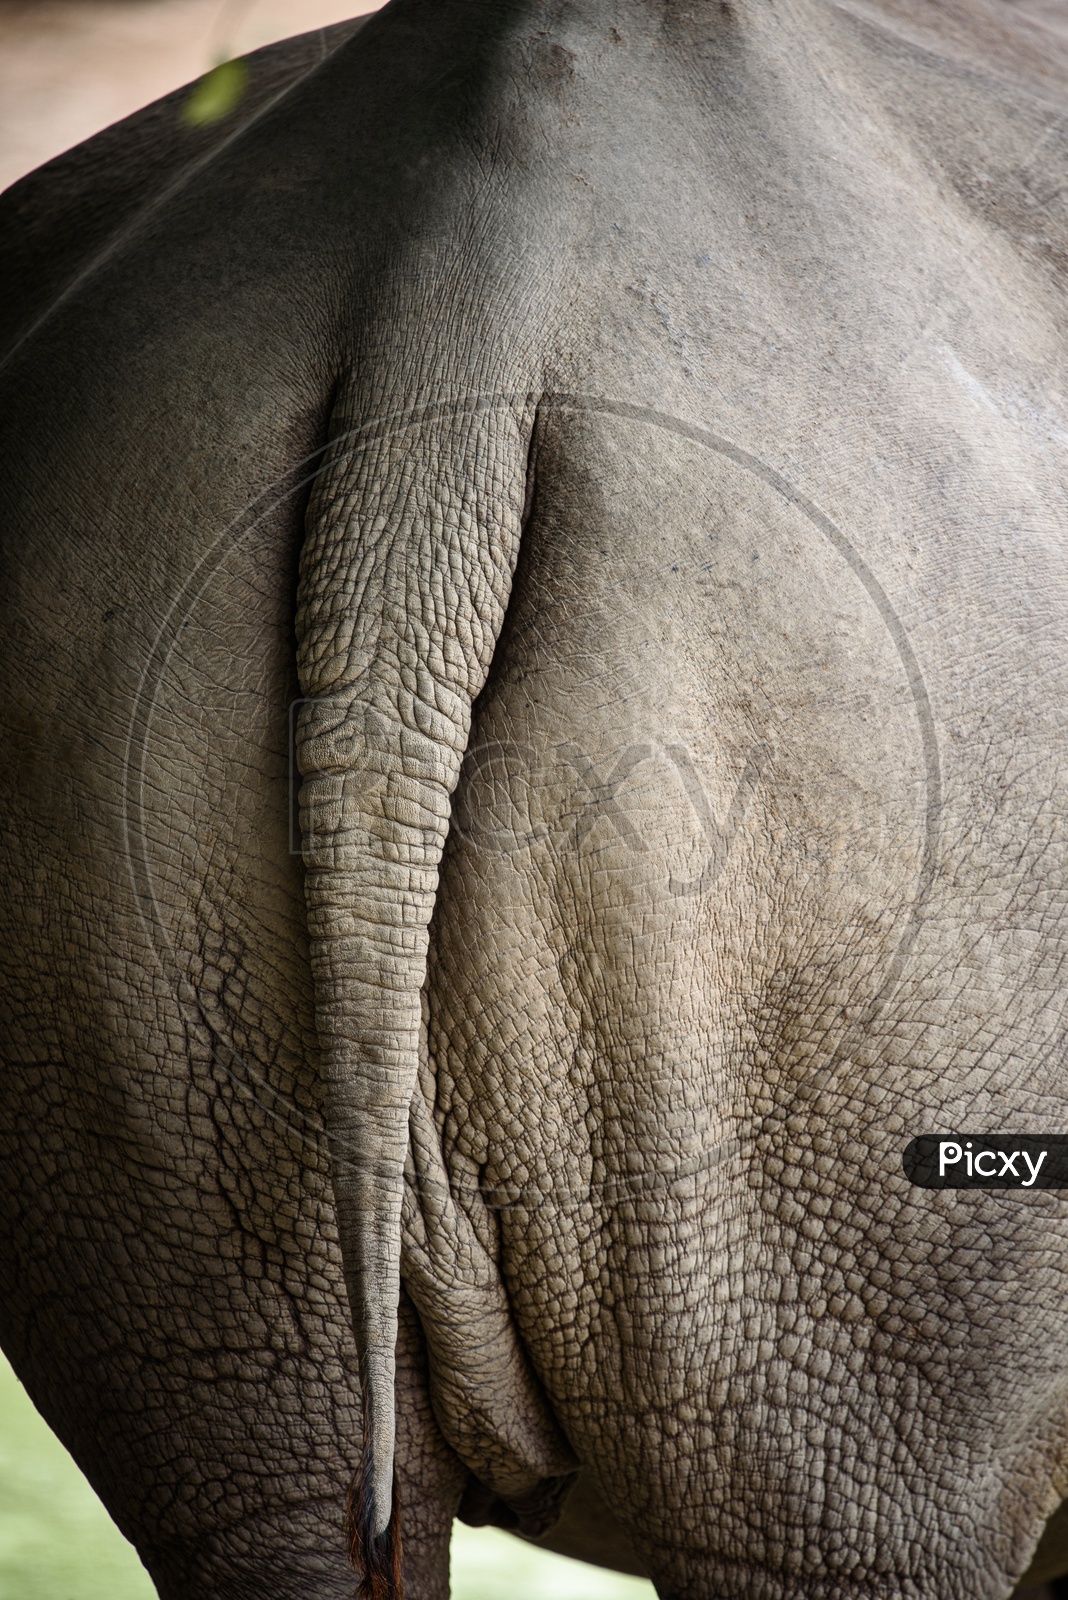 Rhinoceros Tail close up shot